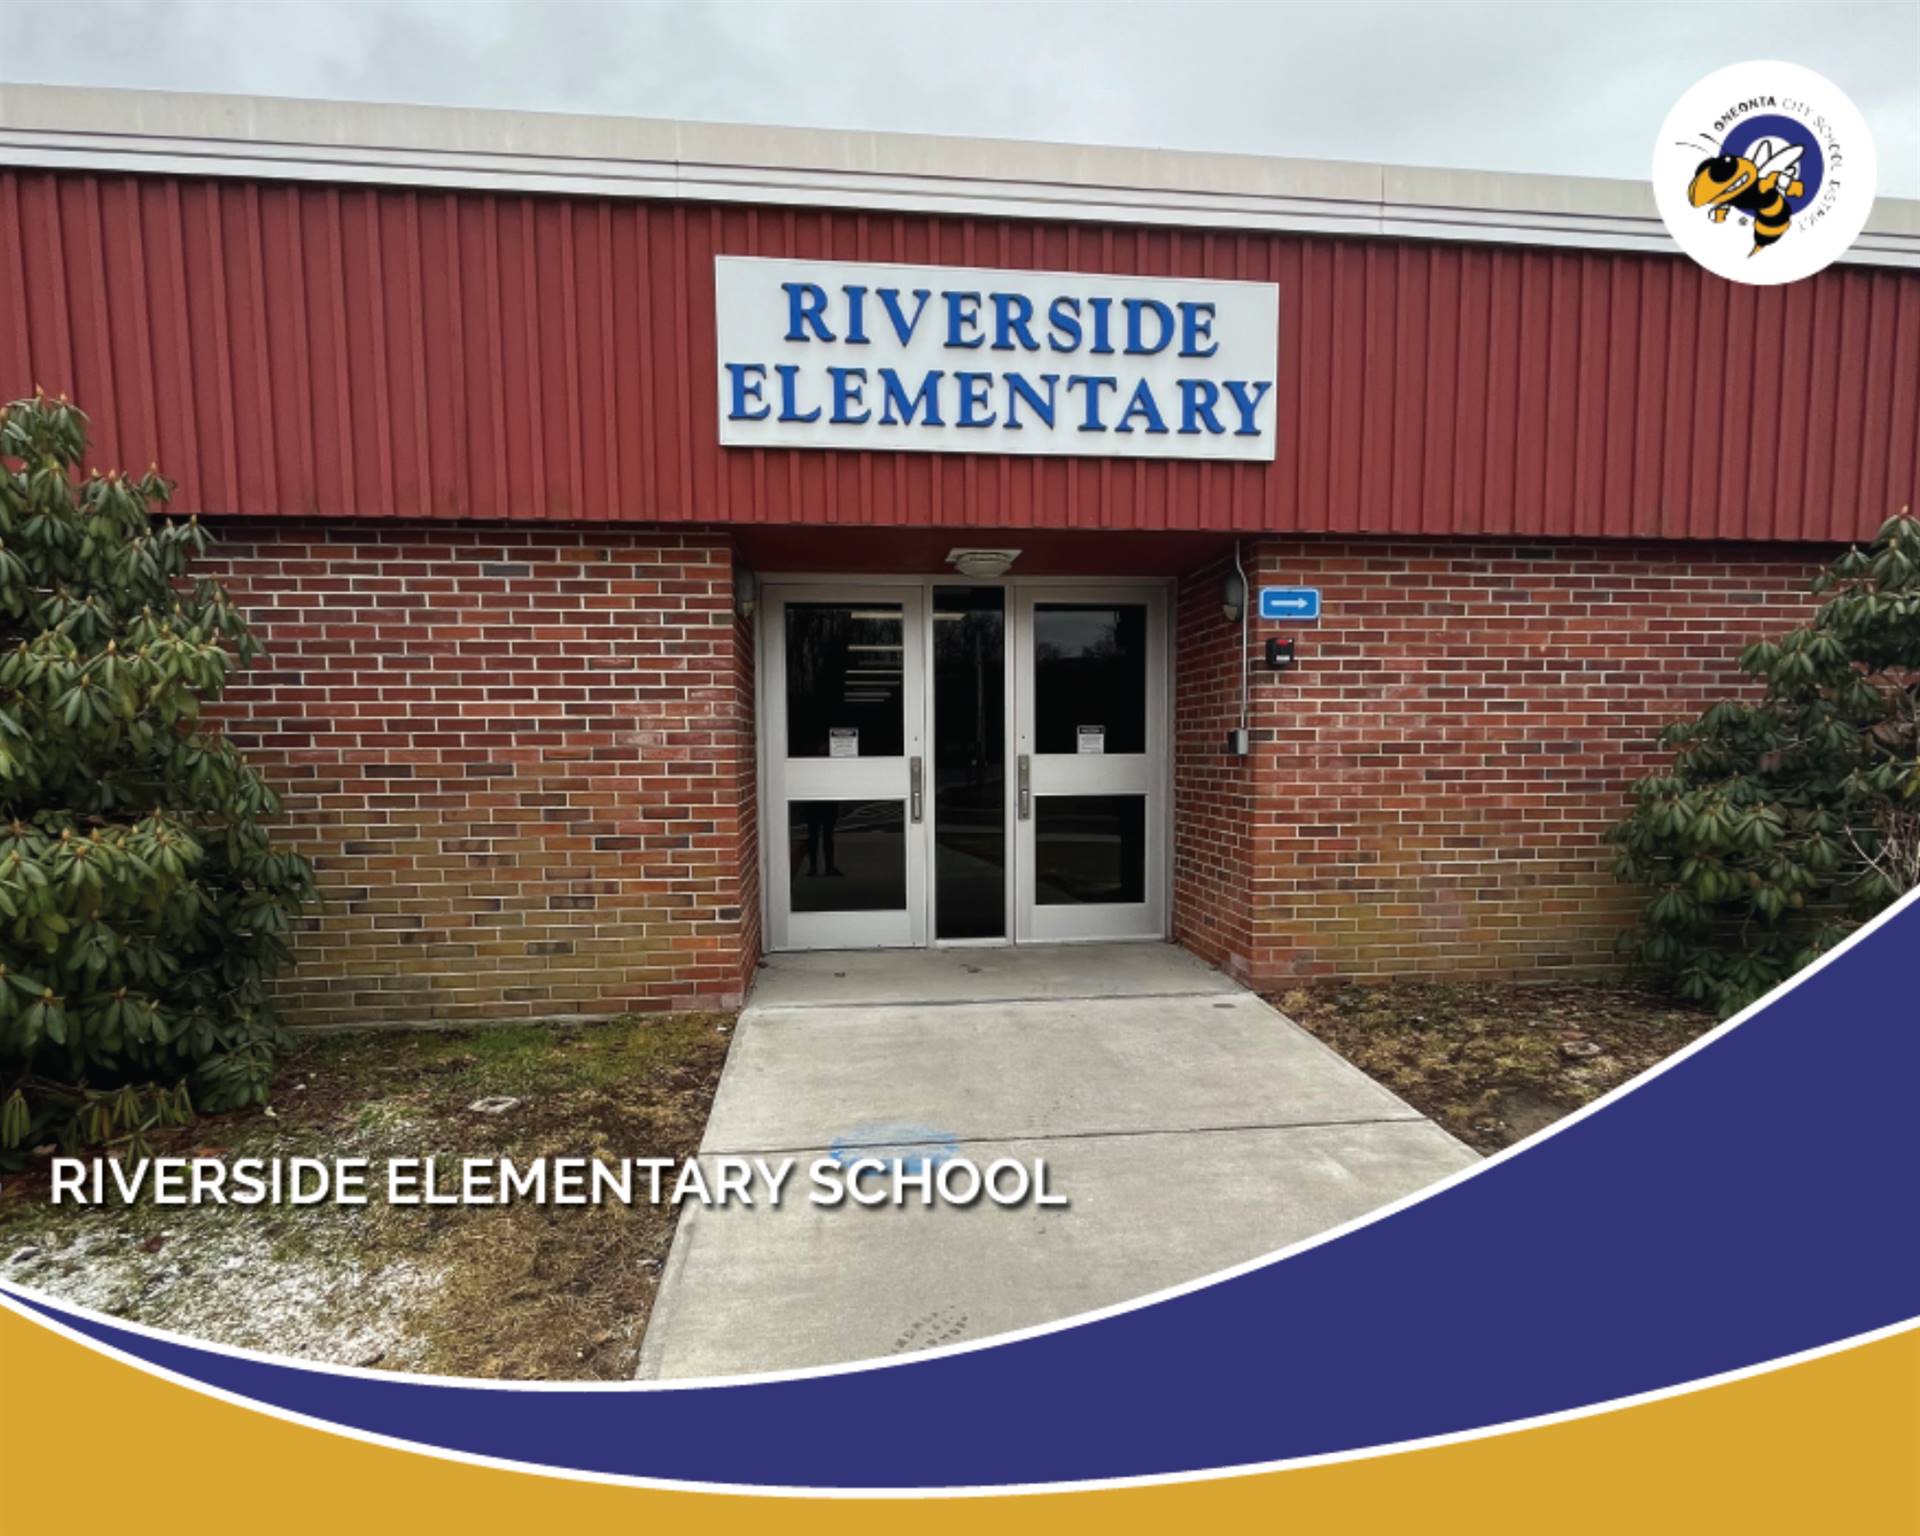 Photo of Riverside Elementary School Building